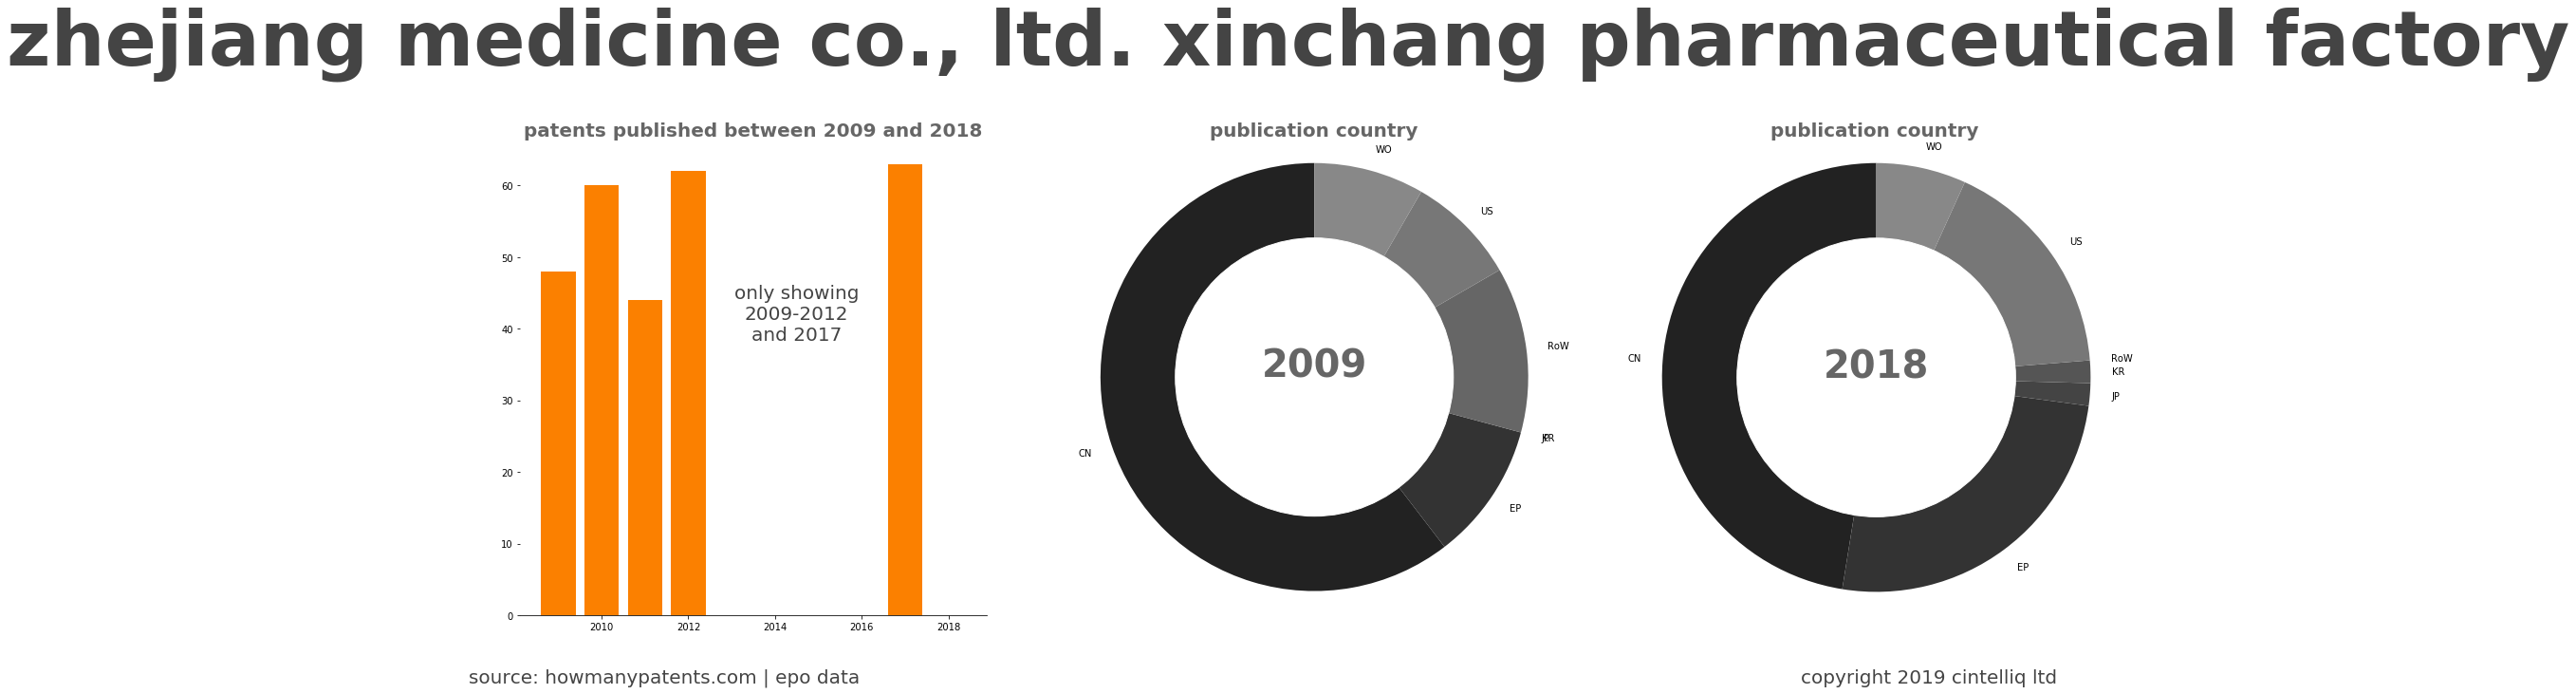 summary of patents for Zhejiang Medicine Co., Ltd. Xinchang Pharmaceutical Factory